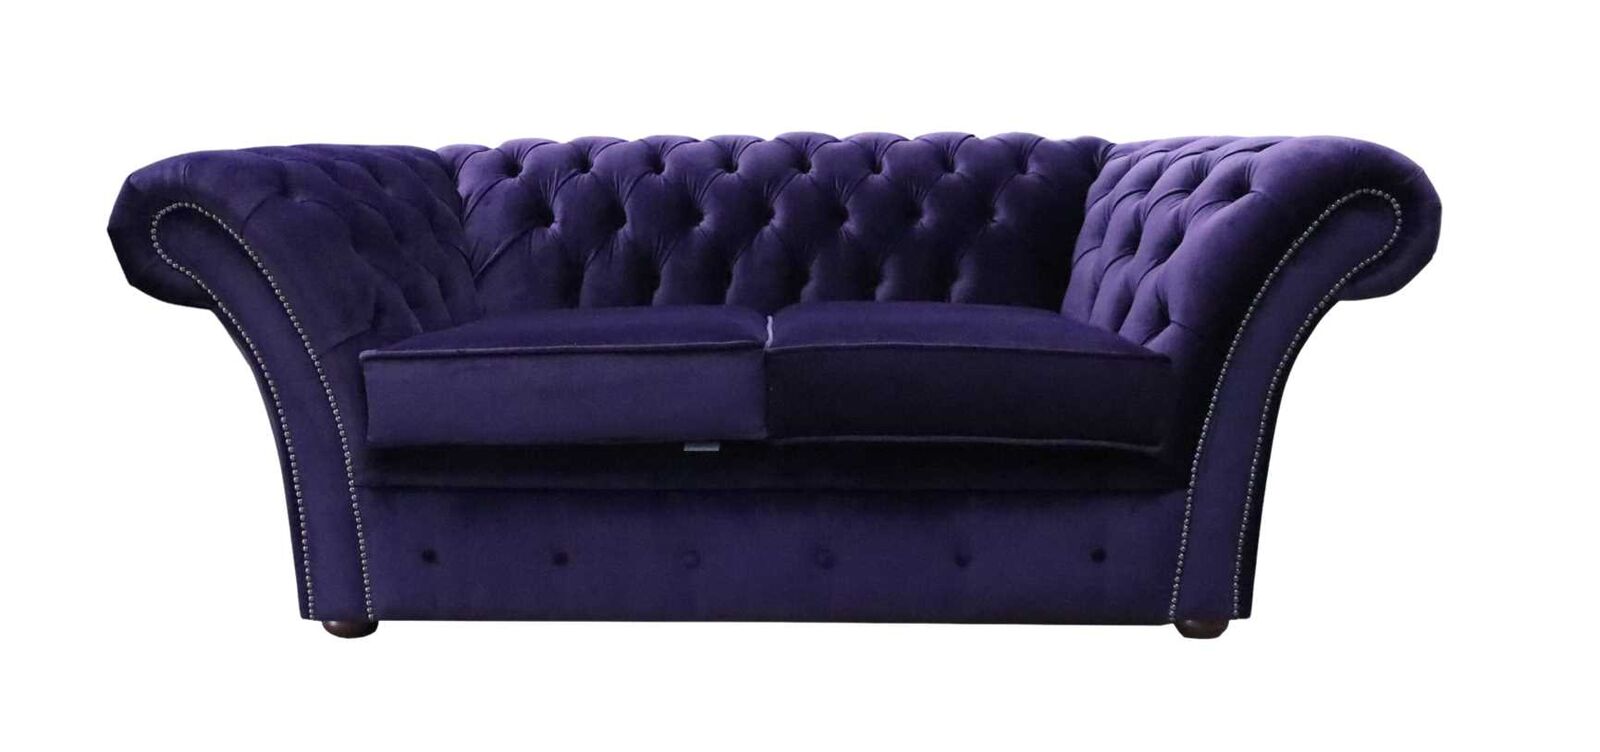 Product photograph of Amethyst Purple Velvet Chesterfield Balmoral Sofa 2 Seater from Designer Sofas 4U